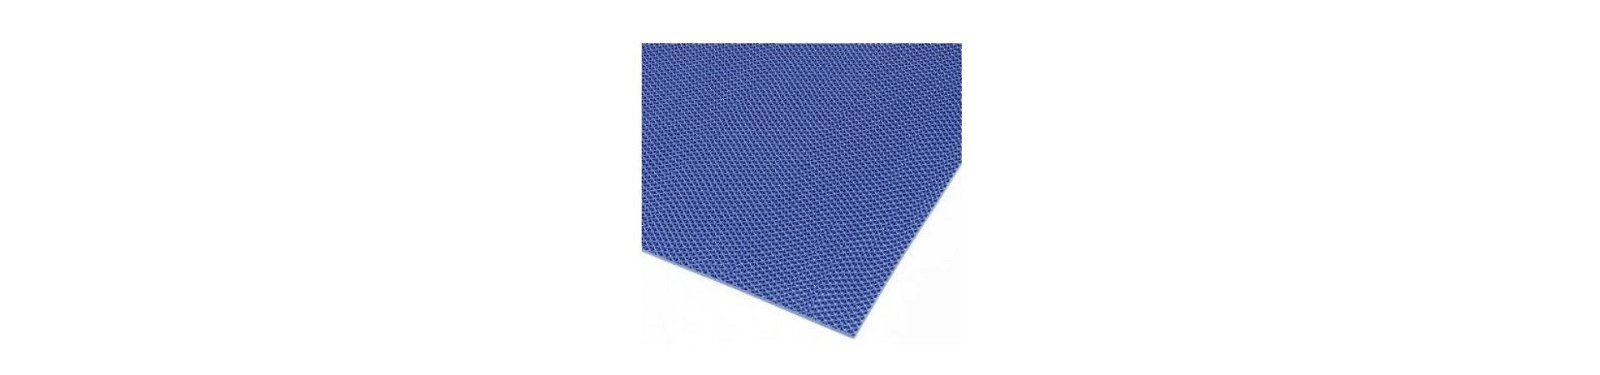 Anti-slip mats for the bathroom - Safe and elegant mats | SuperMaty.pl